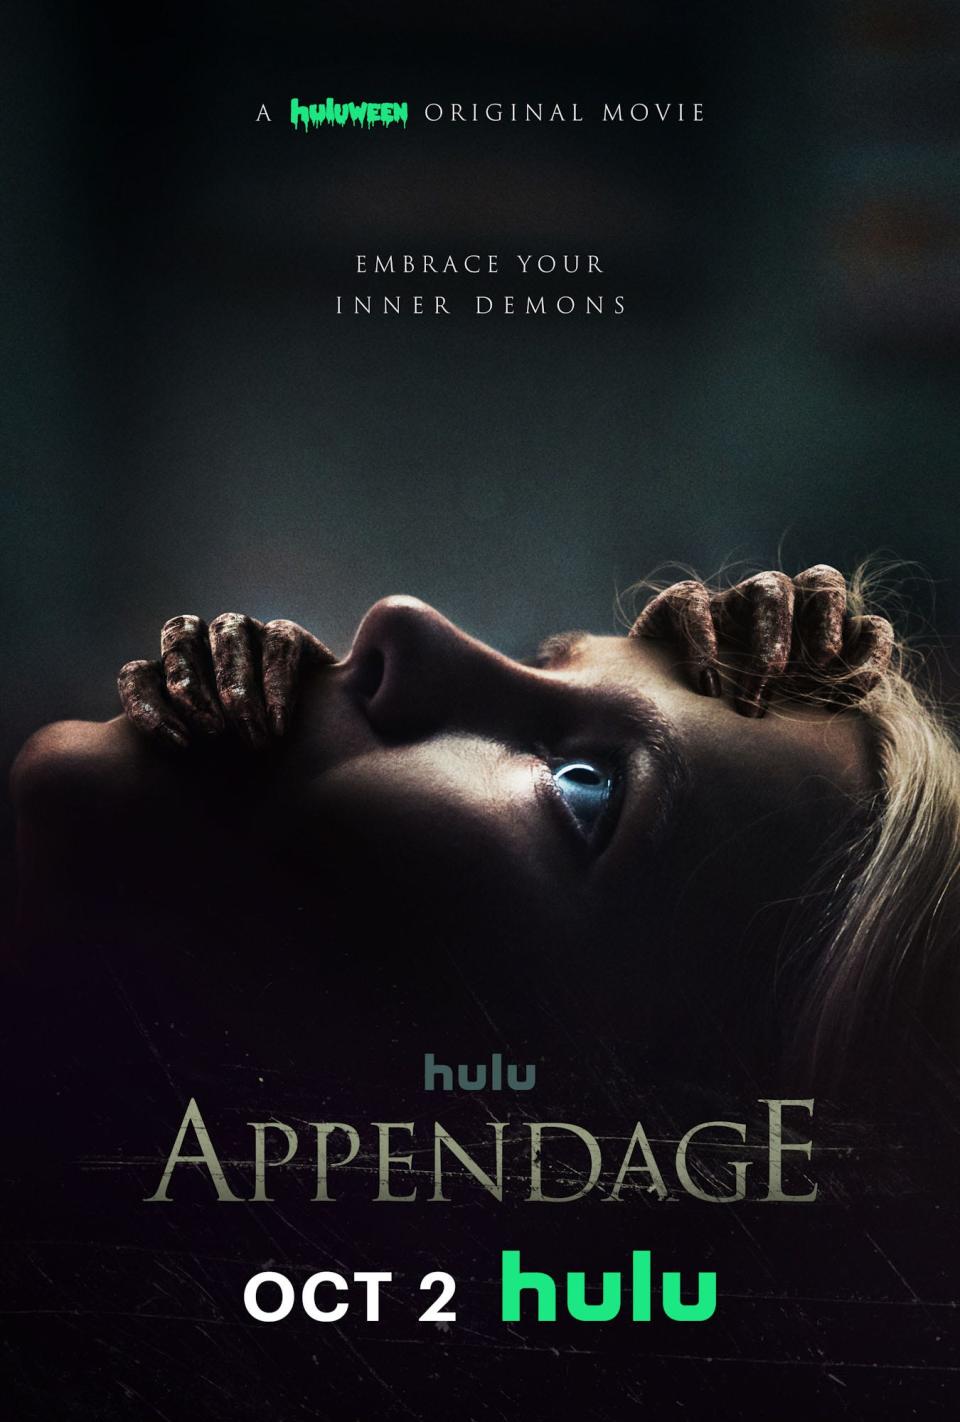 Wilmington-shot horror film "Appendage" streams on Hulu starting Oct. 2.